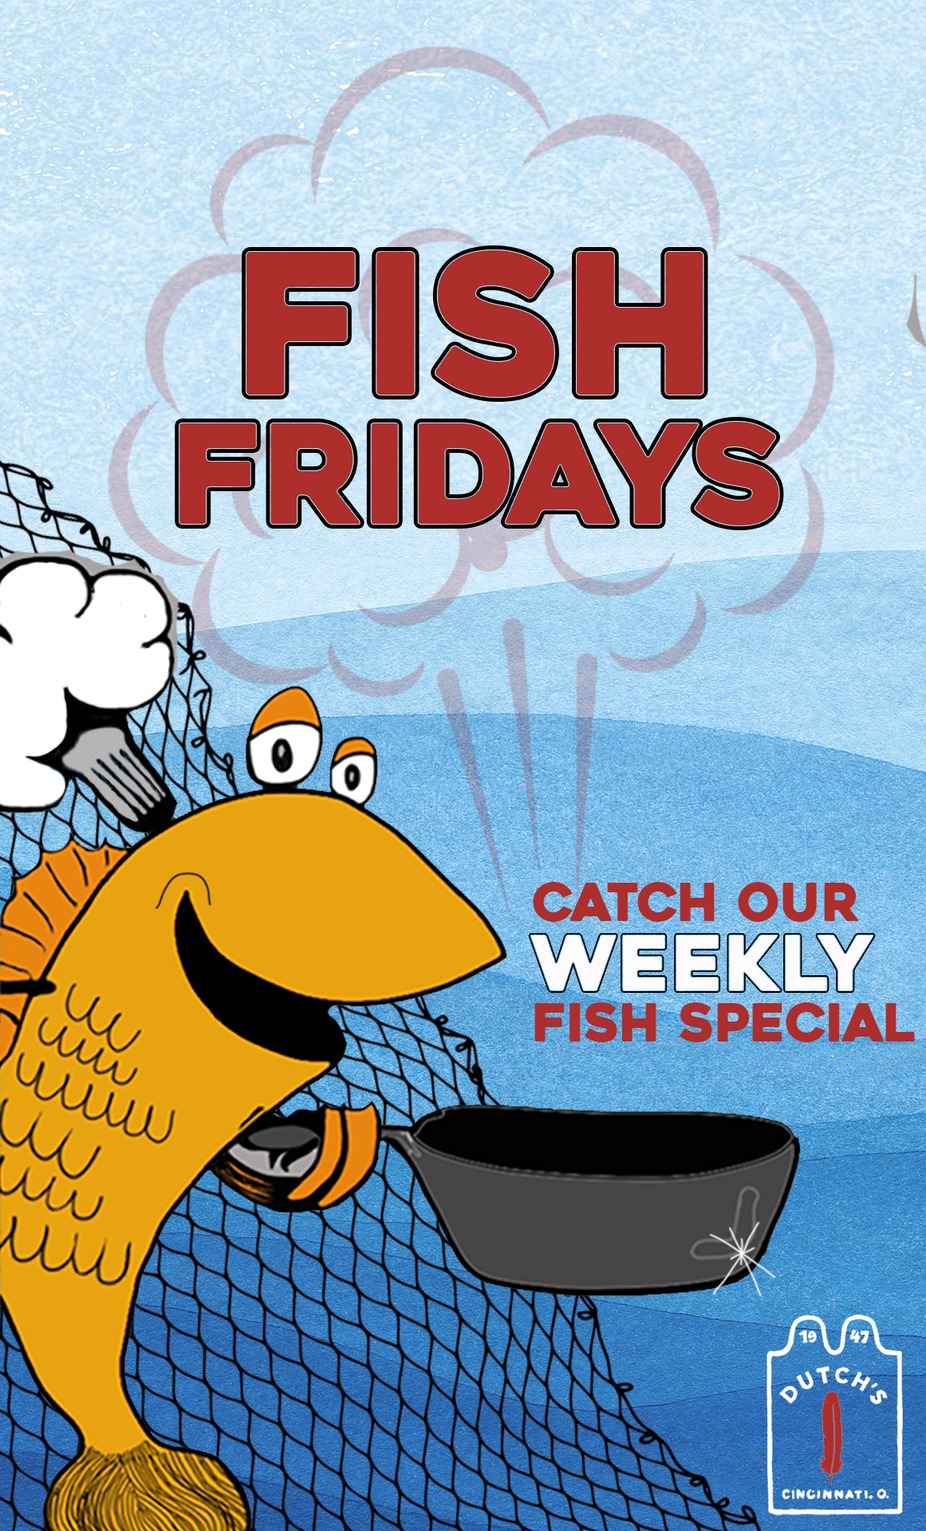 Fish Fridays event photo